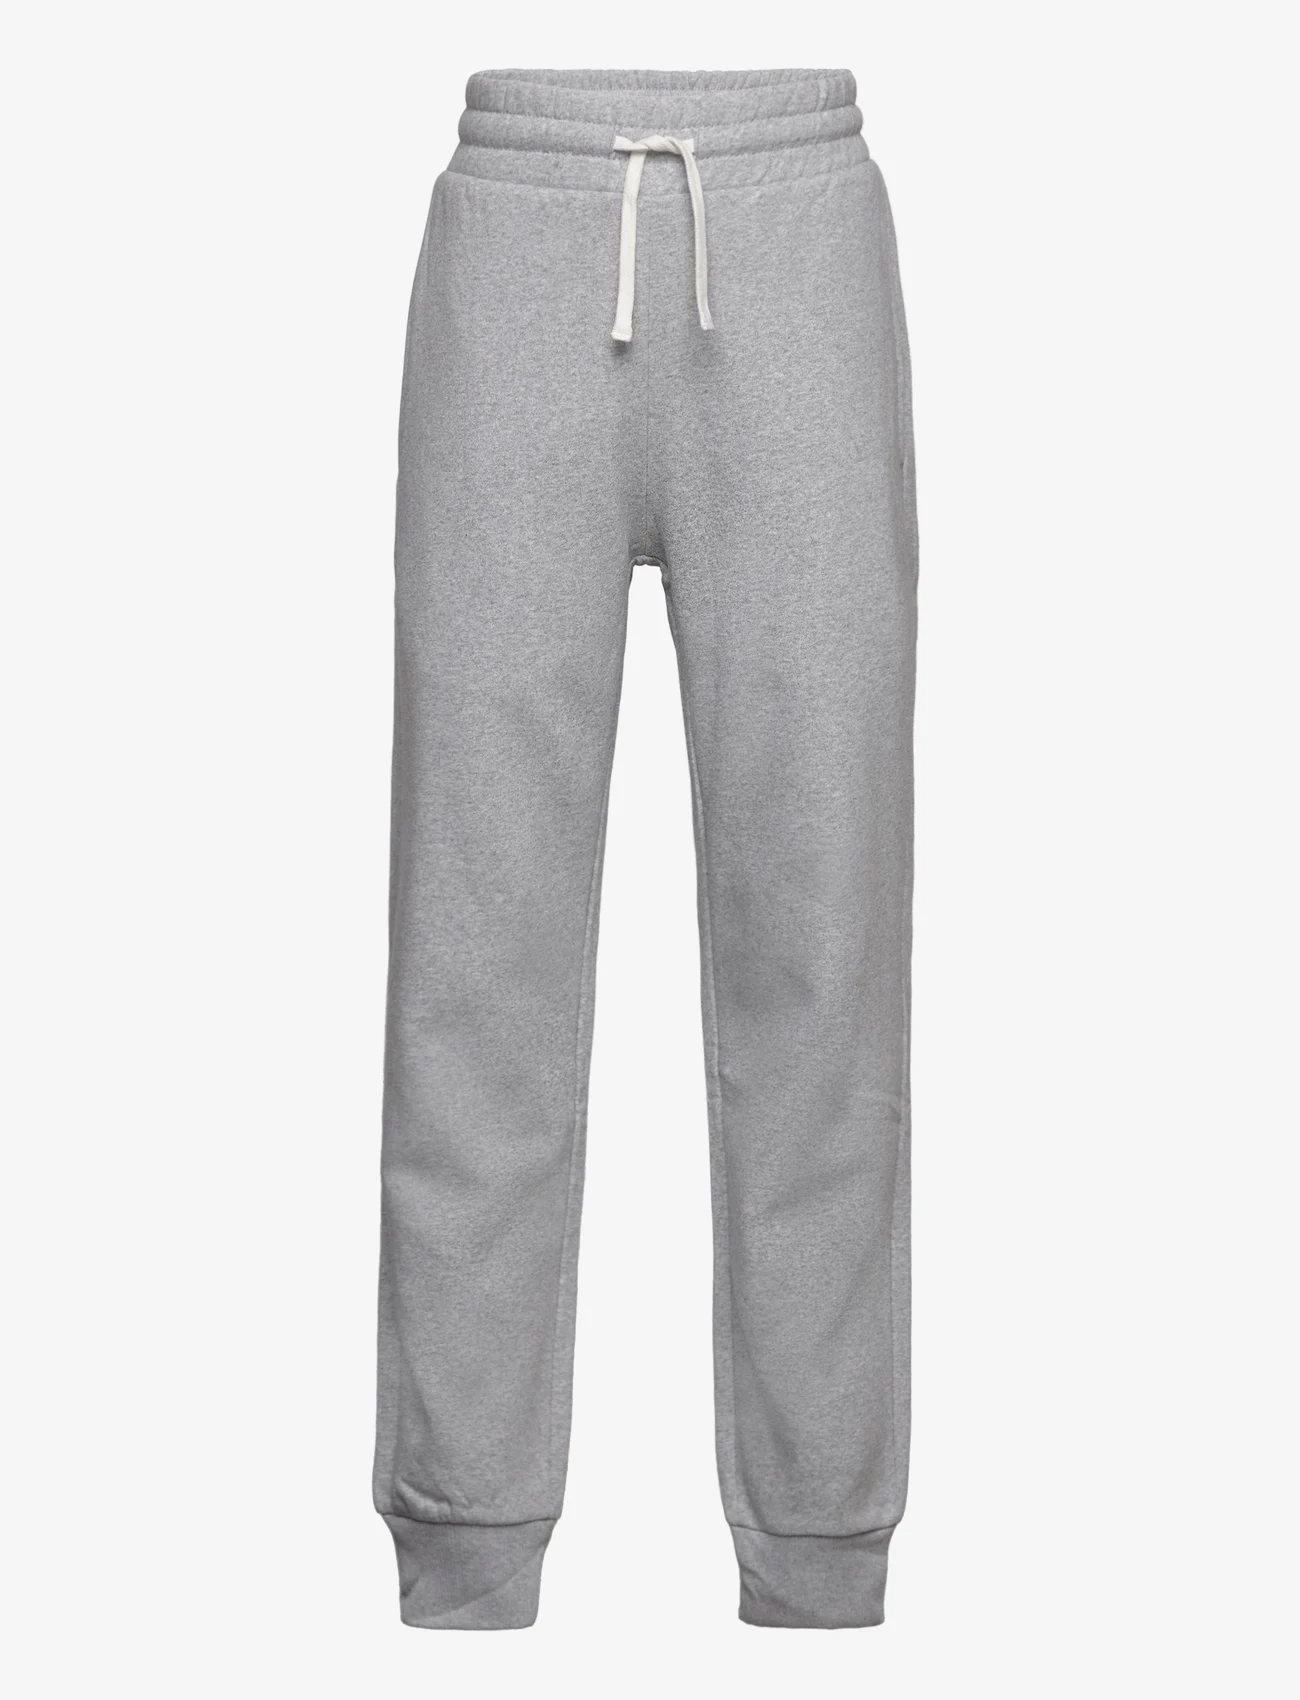 Lindex - Trousers basic - trousers - grey melange - 1